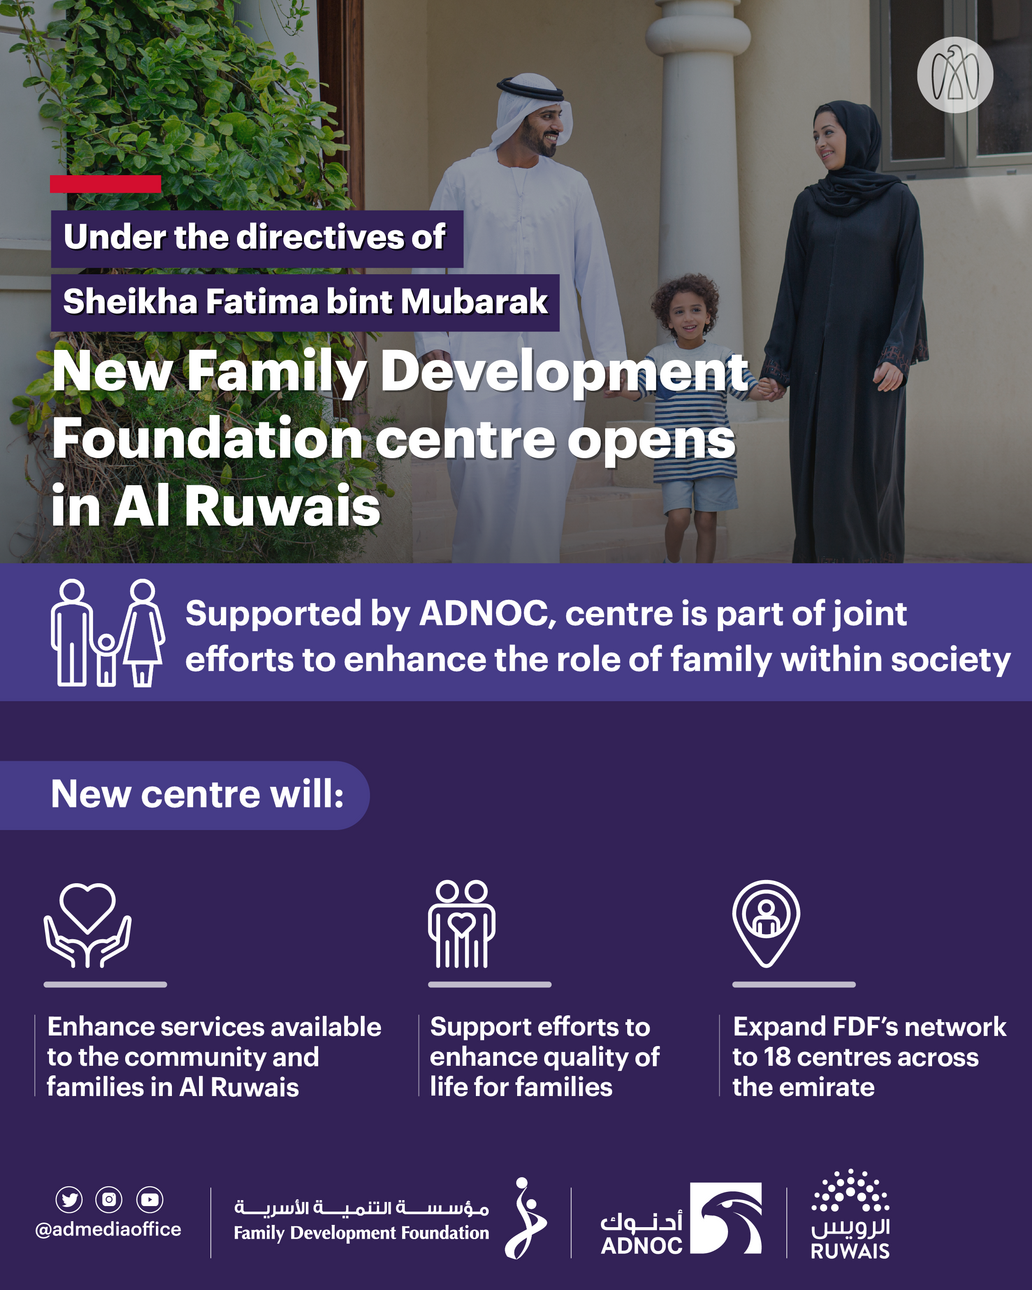 New Family Development Foundation centre opens in Al Ruwais